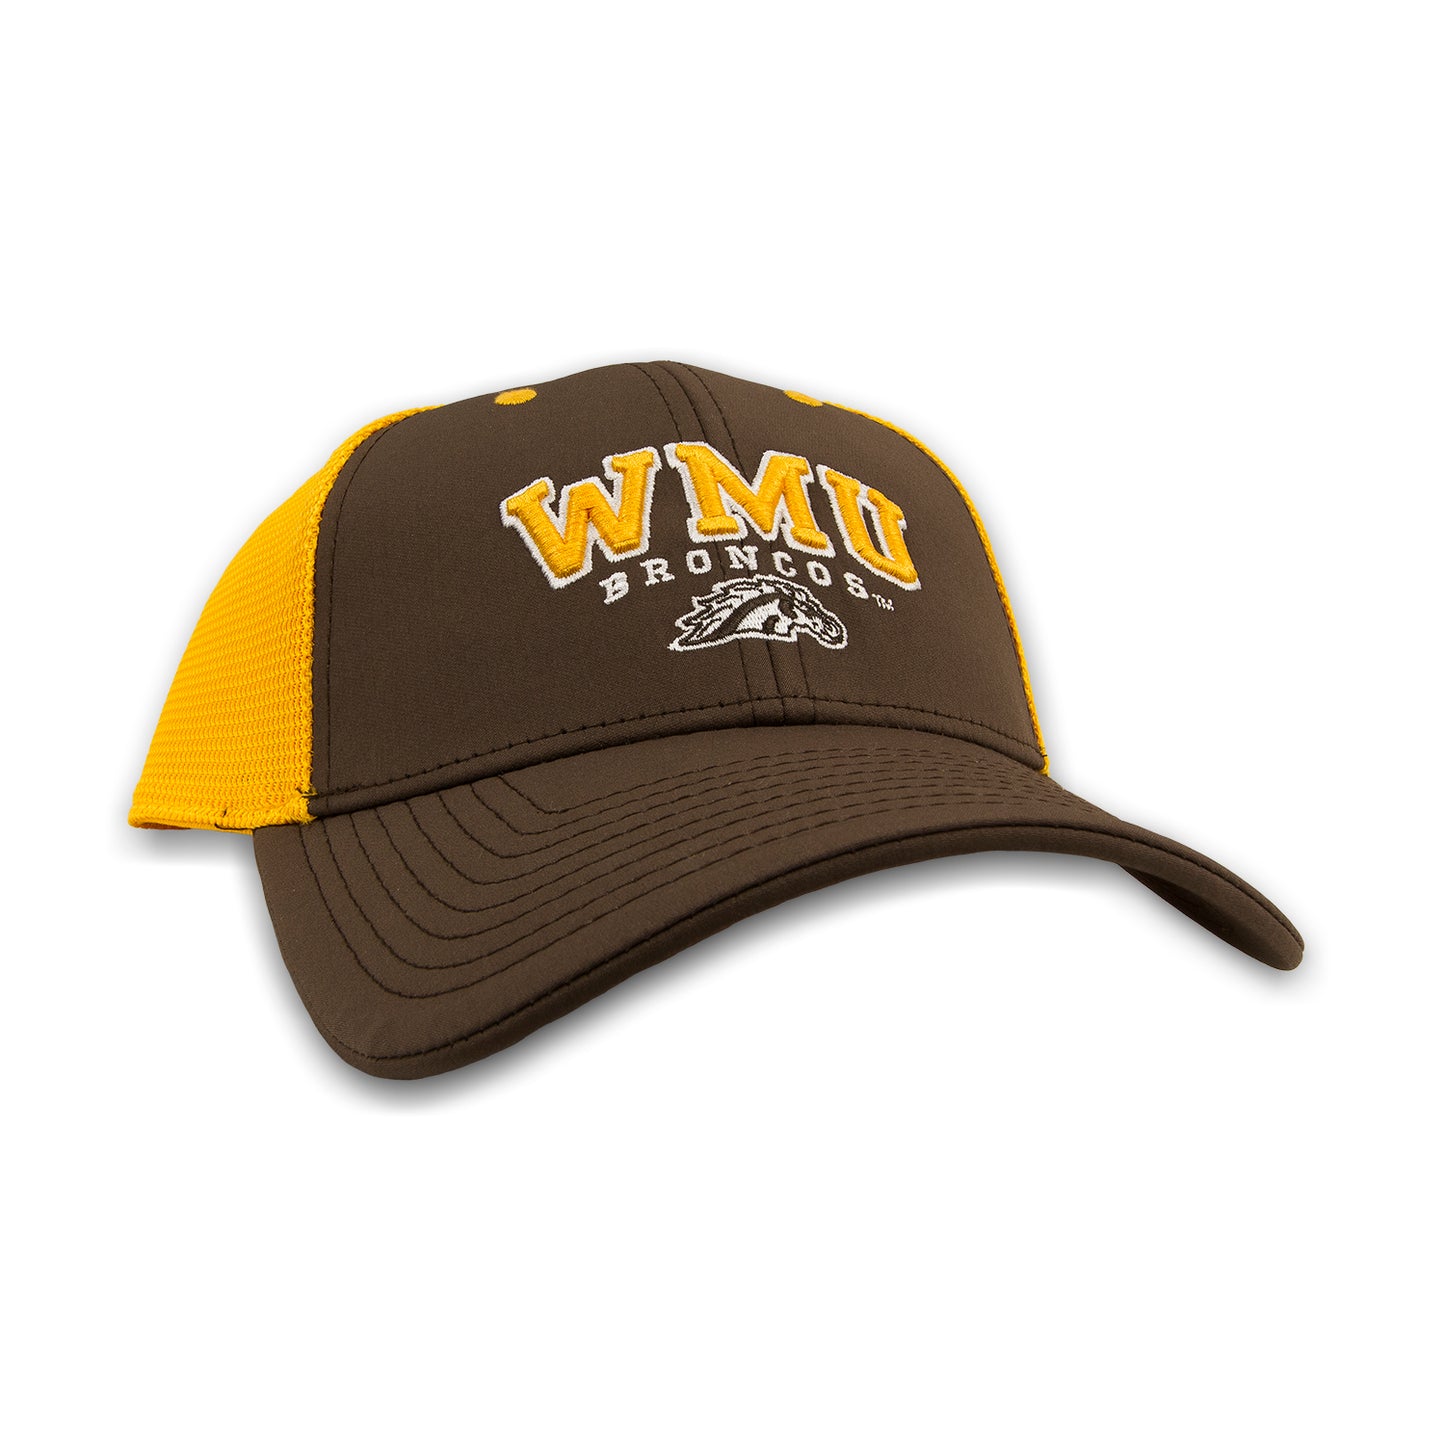 WMU Broncos Trucker Cap